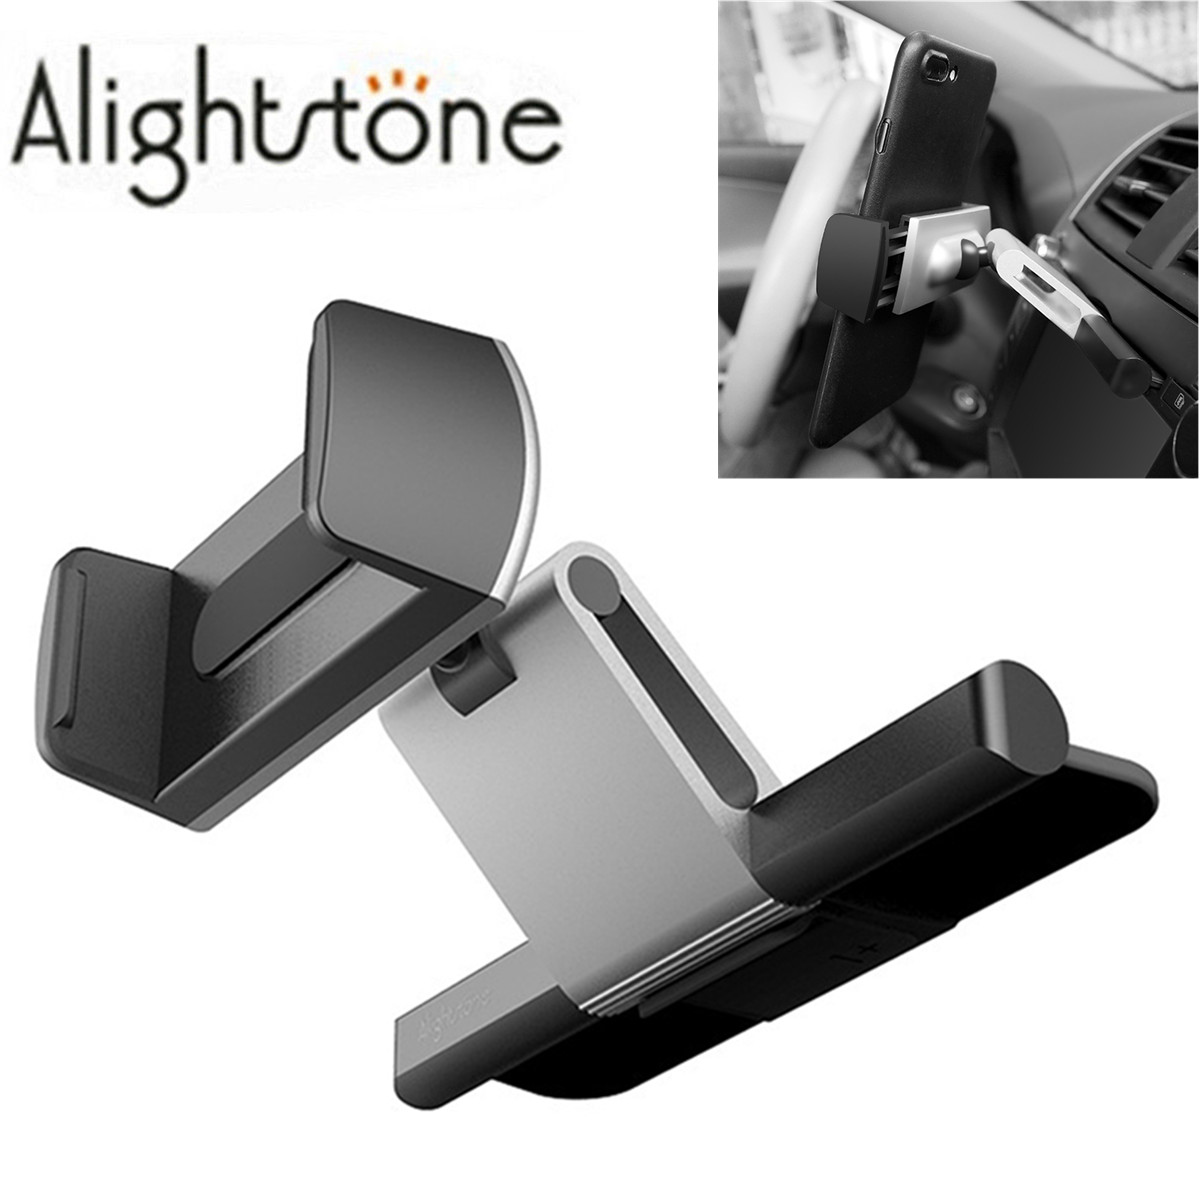 Alightstone-360-Degree-Rotation-Car-CD-Slot-Holder-Phone-Mount-Stand-Bracket-for-iPhone-X-Samsung-S8-1246748-1